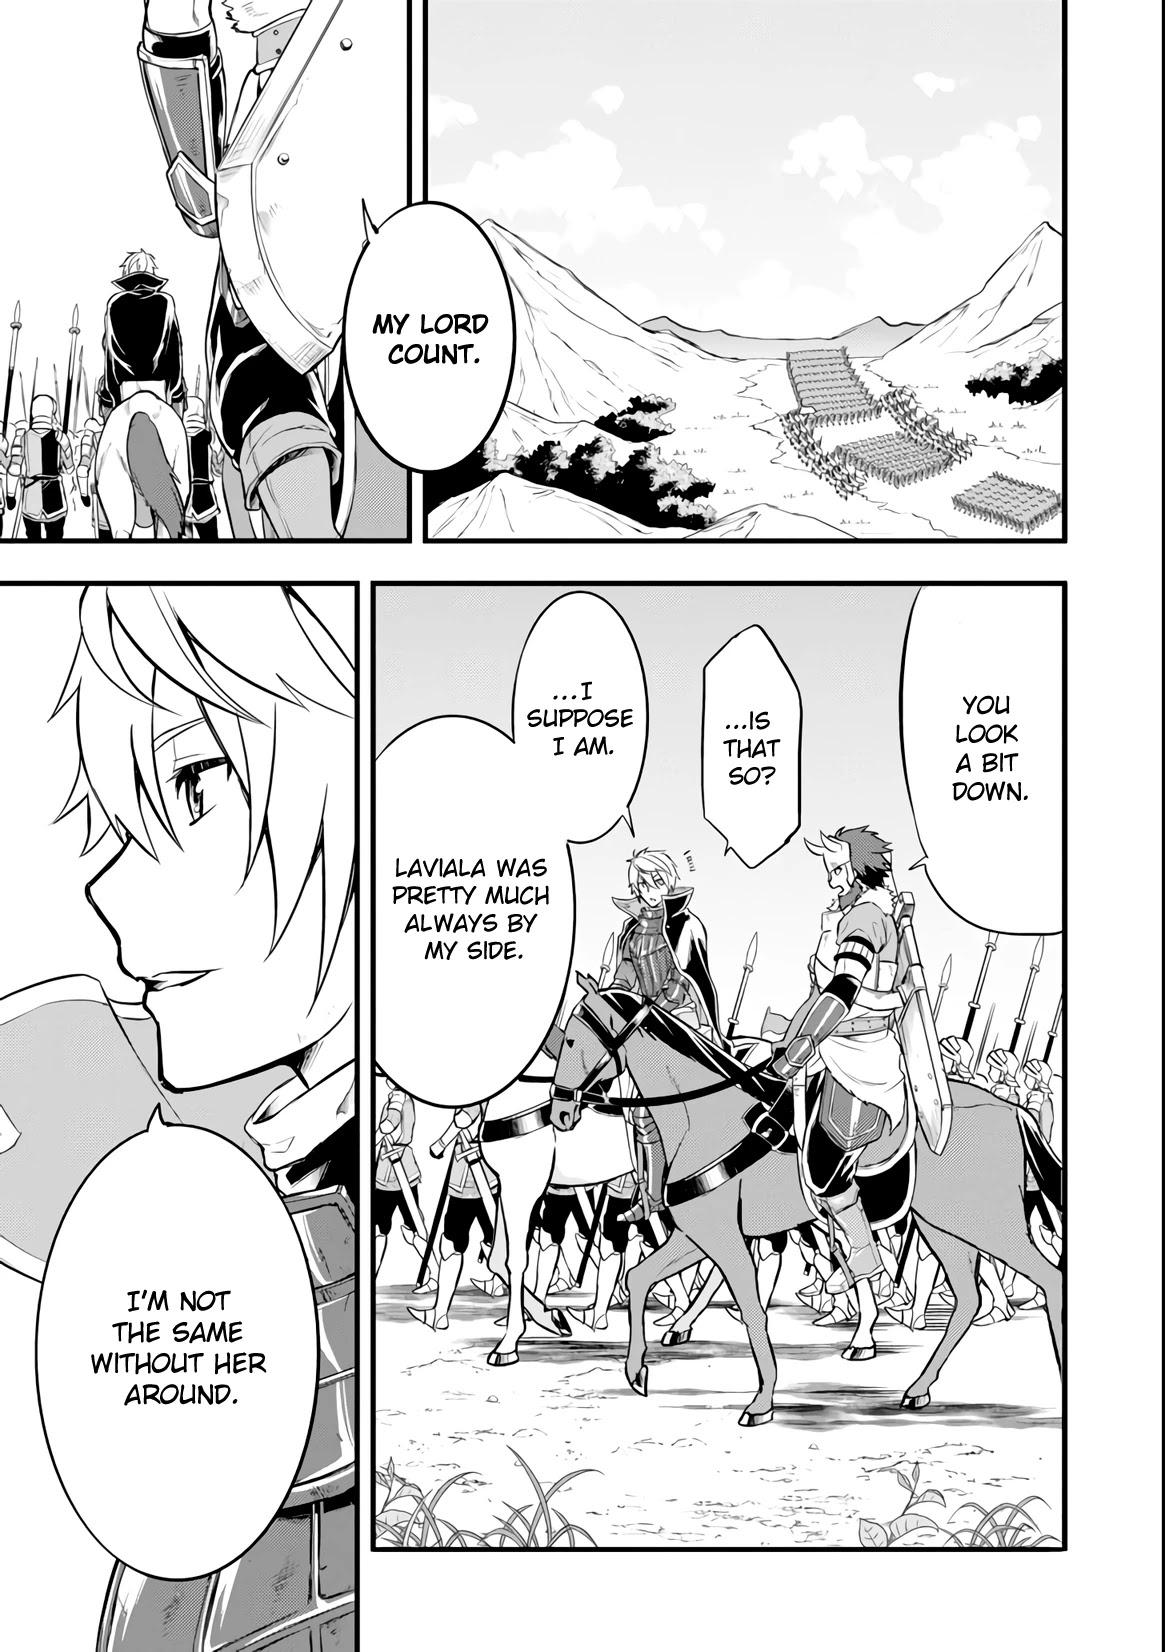 Mysterious Job Called Oda Nobunaga - Page 1